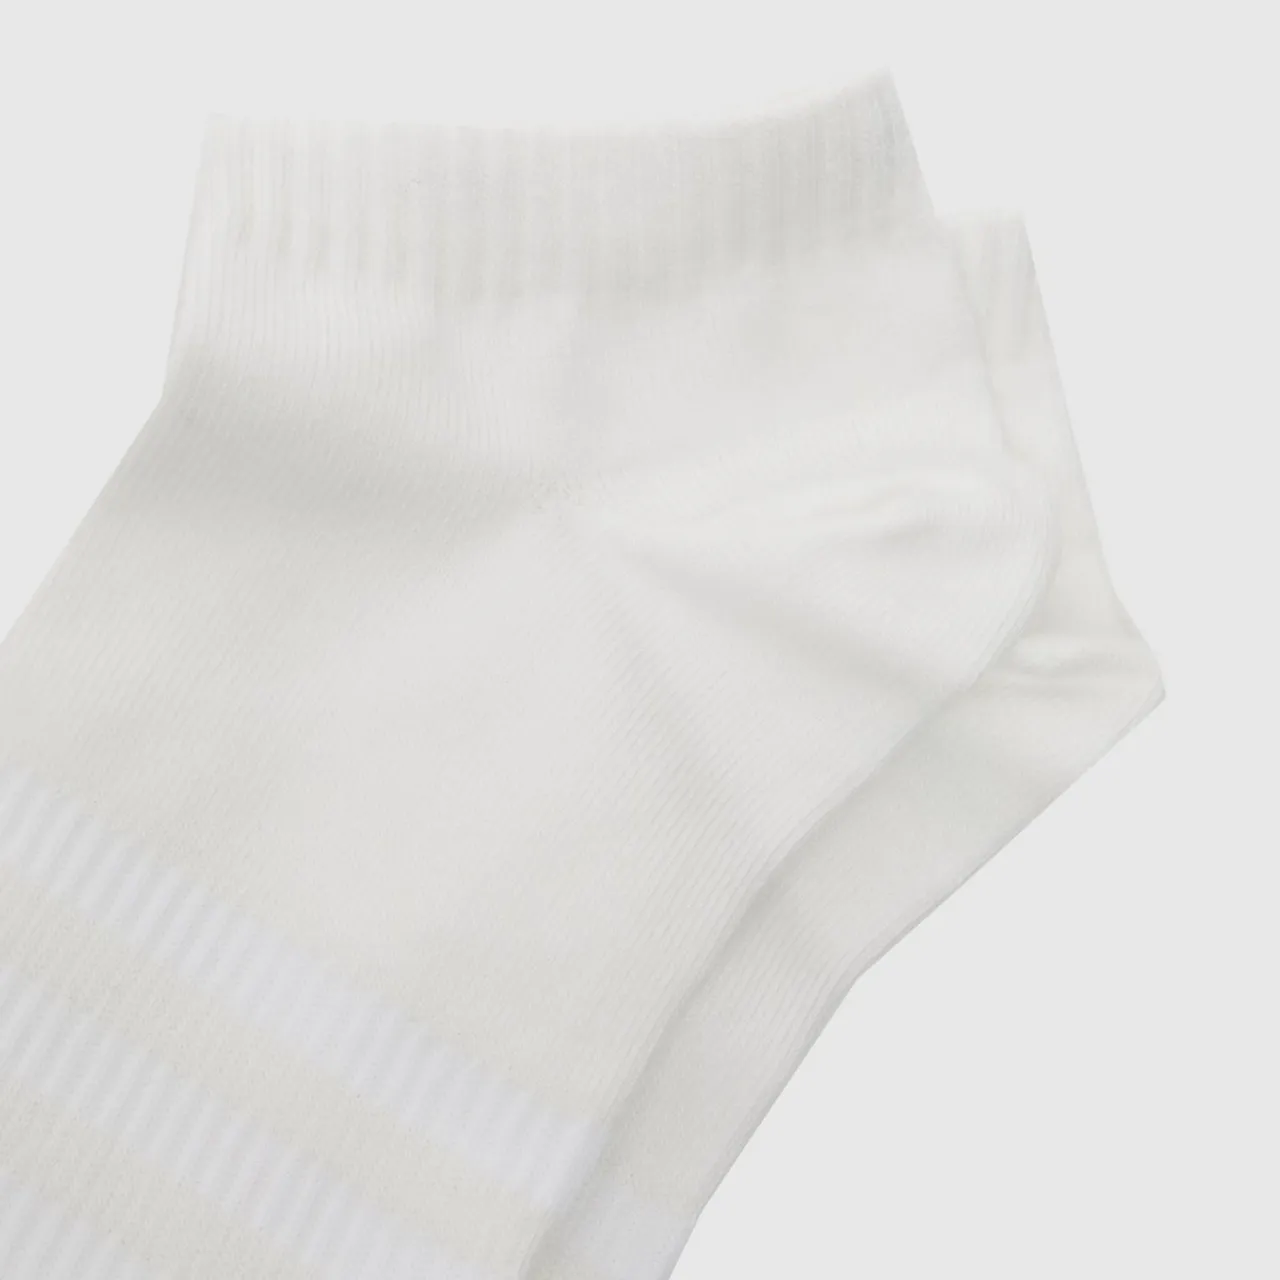 Adidas White & Black Ankle Sock 3 Pack